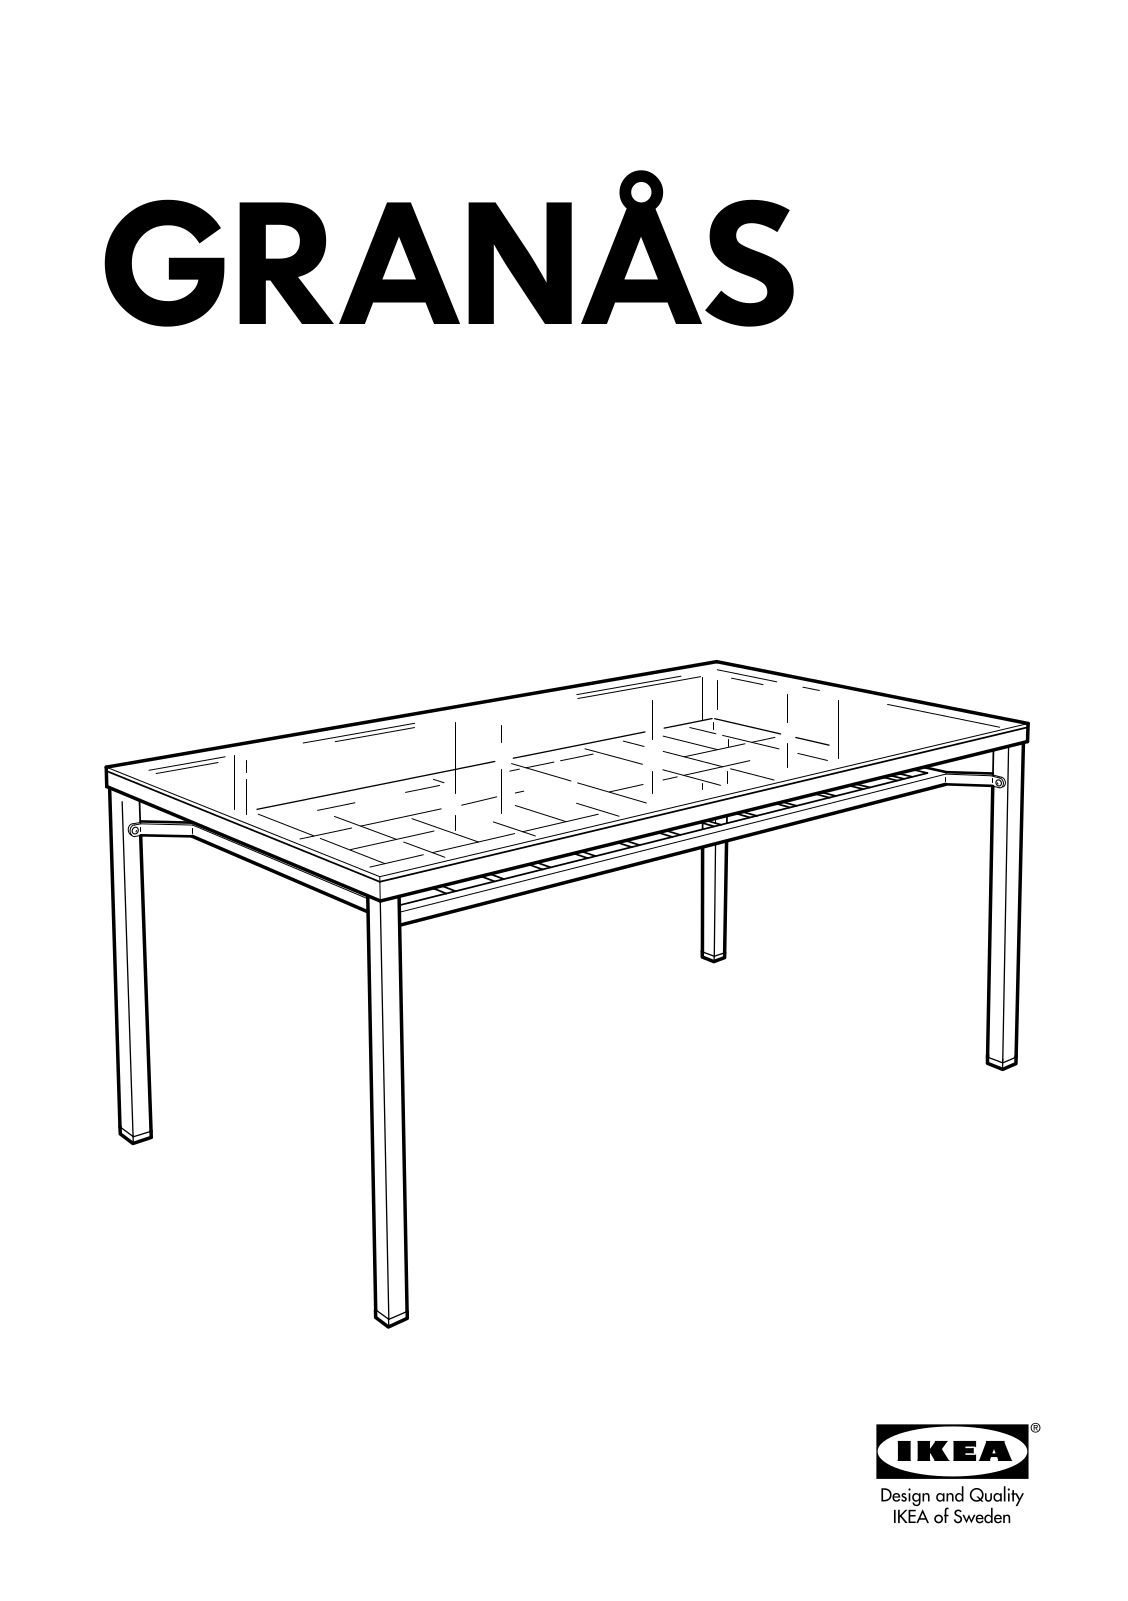 IKEA GRANAS TABLE User Manual